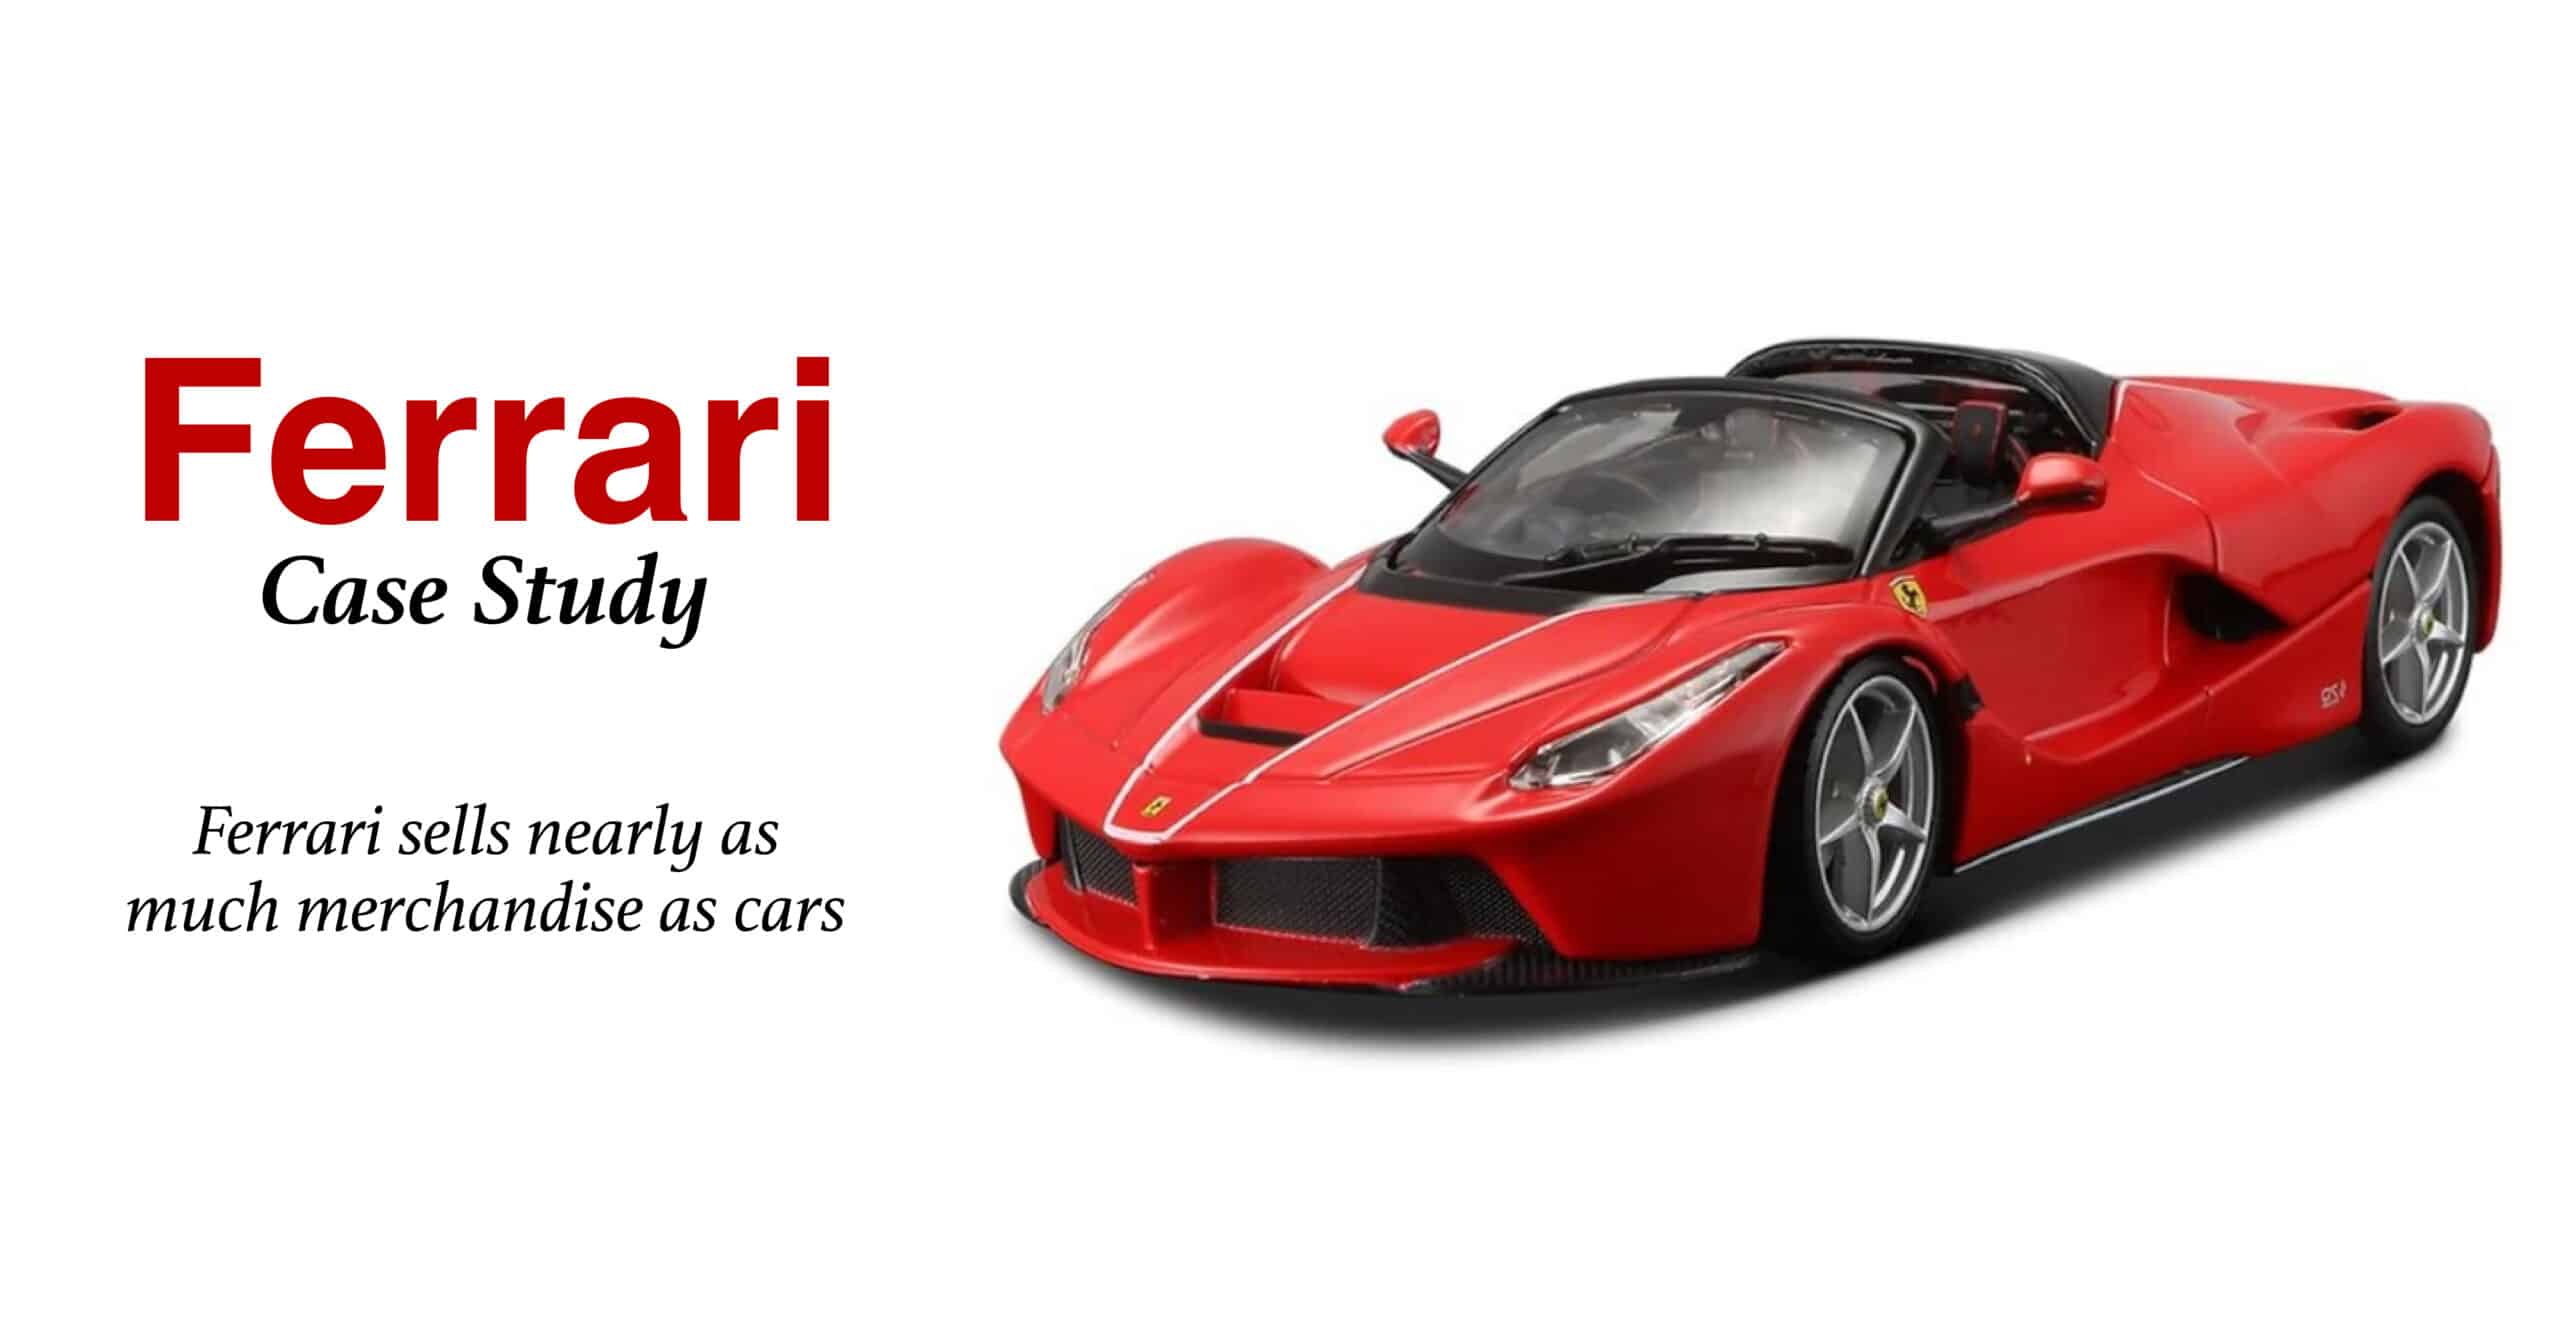 Ferrari case study for the Ferrari brand strategy